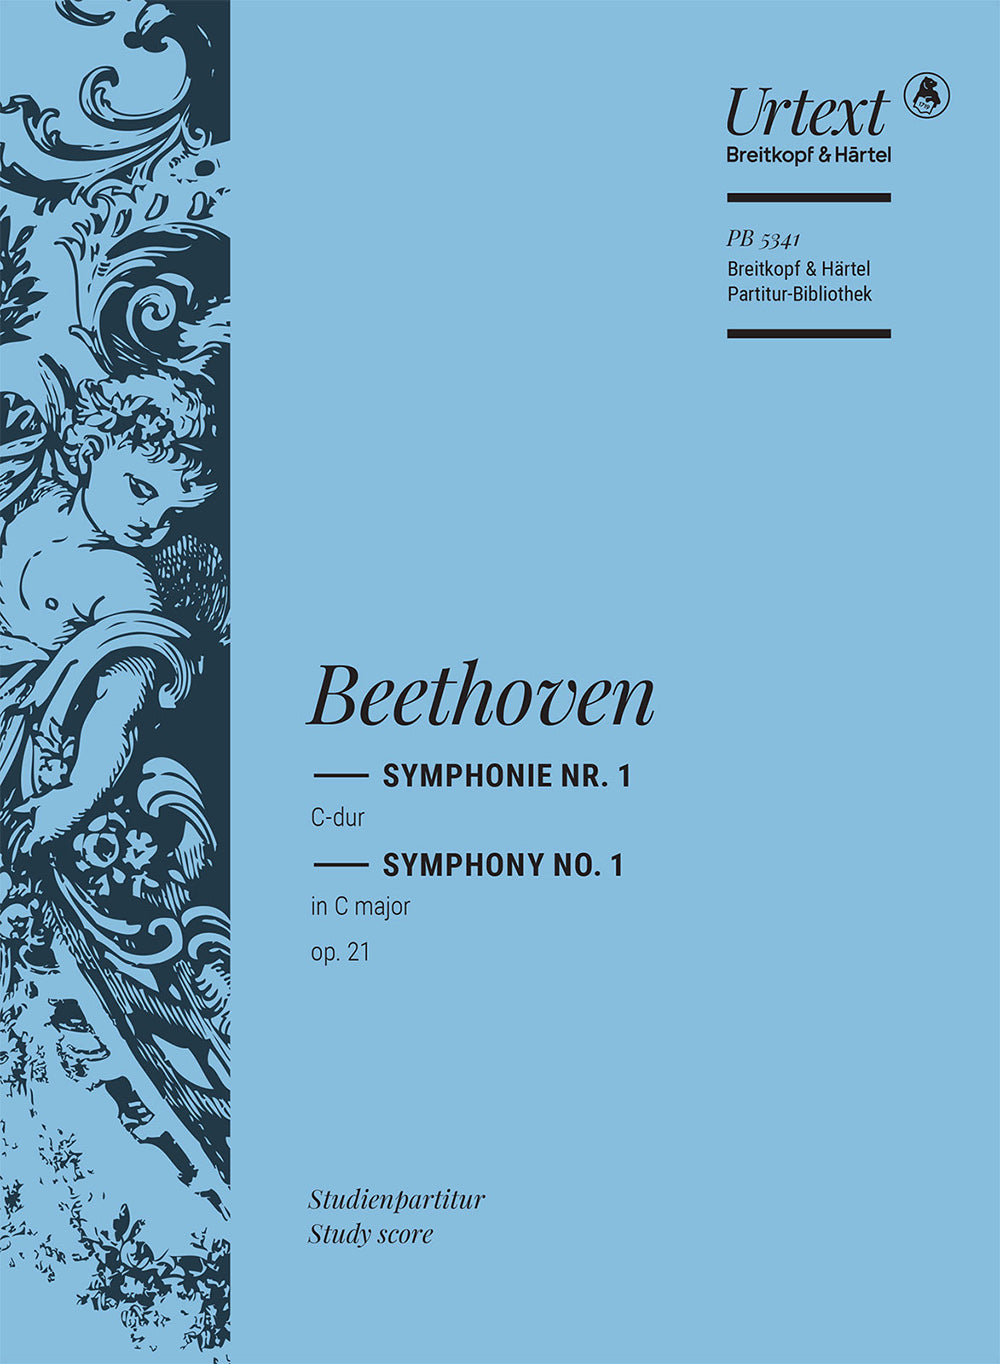 Beethoven: Symphony No. 1 in C major Op. 21